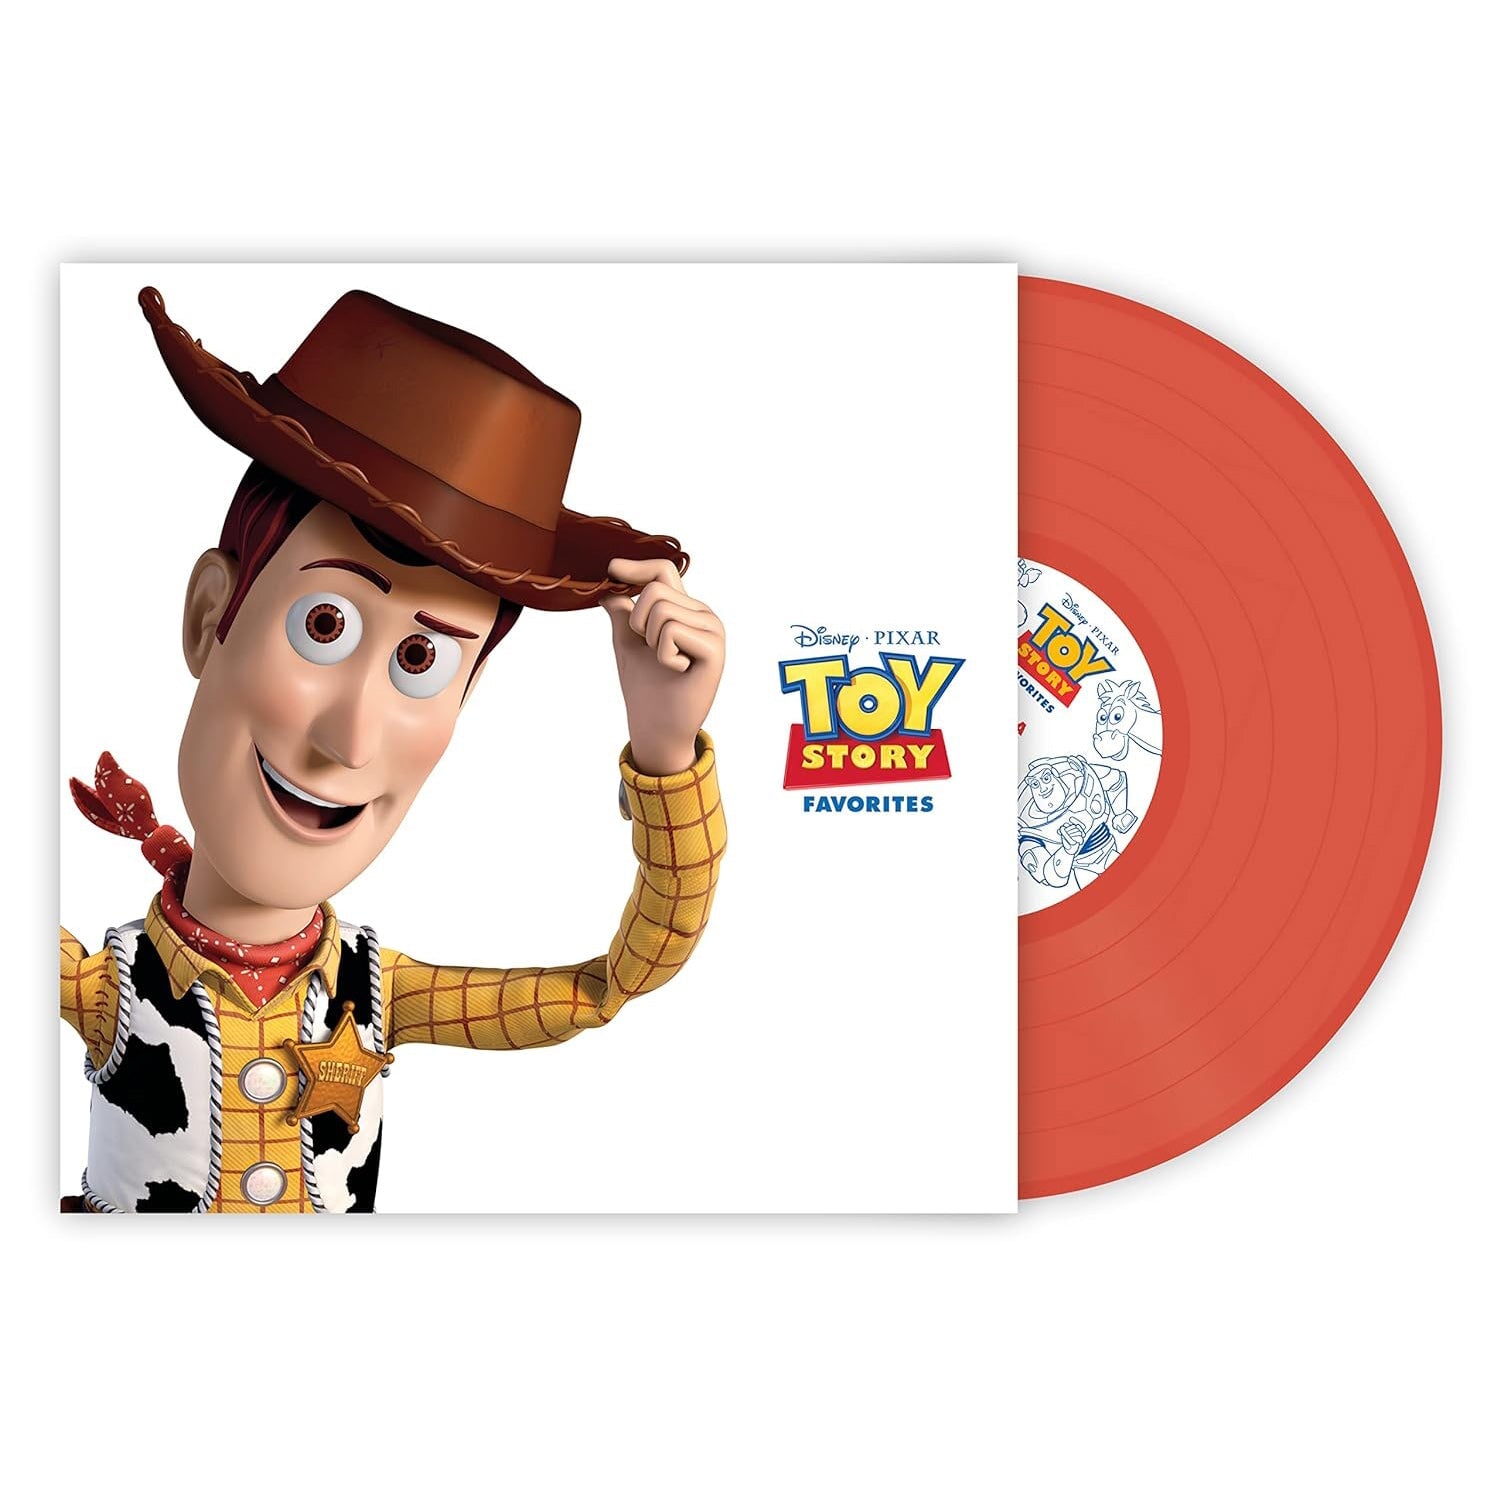 Toy Story Favorites (Soundtrack) (Red Vinyl LP)